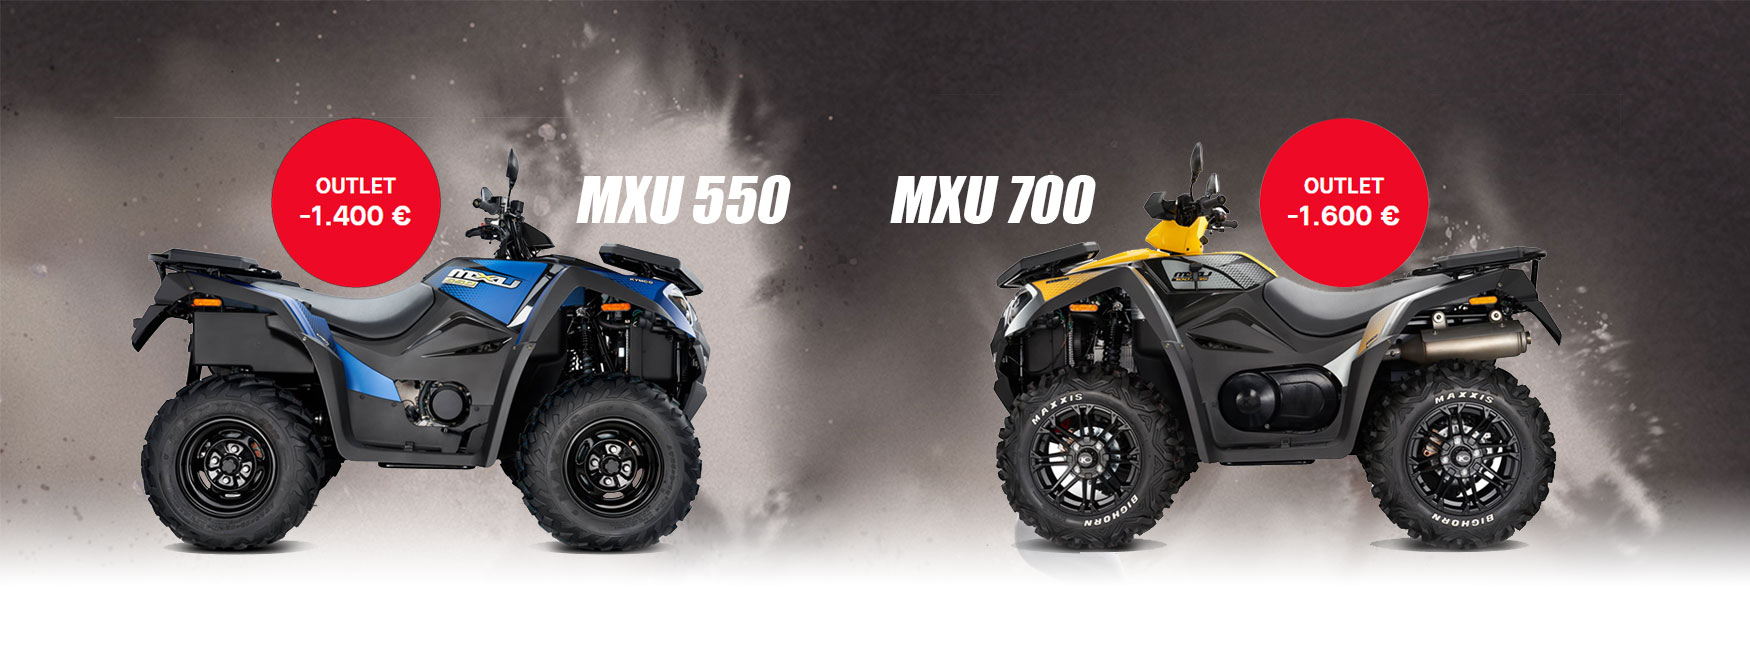 KYMCO MXU - Motos madrid - tienda | taller | compra | venta